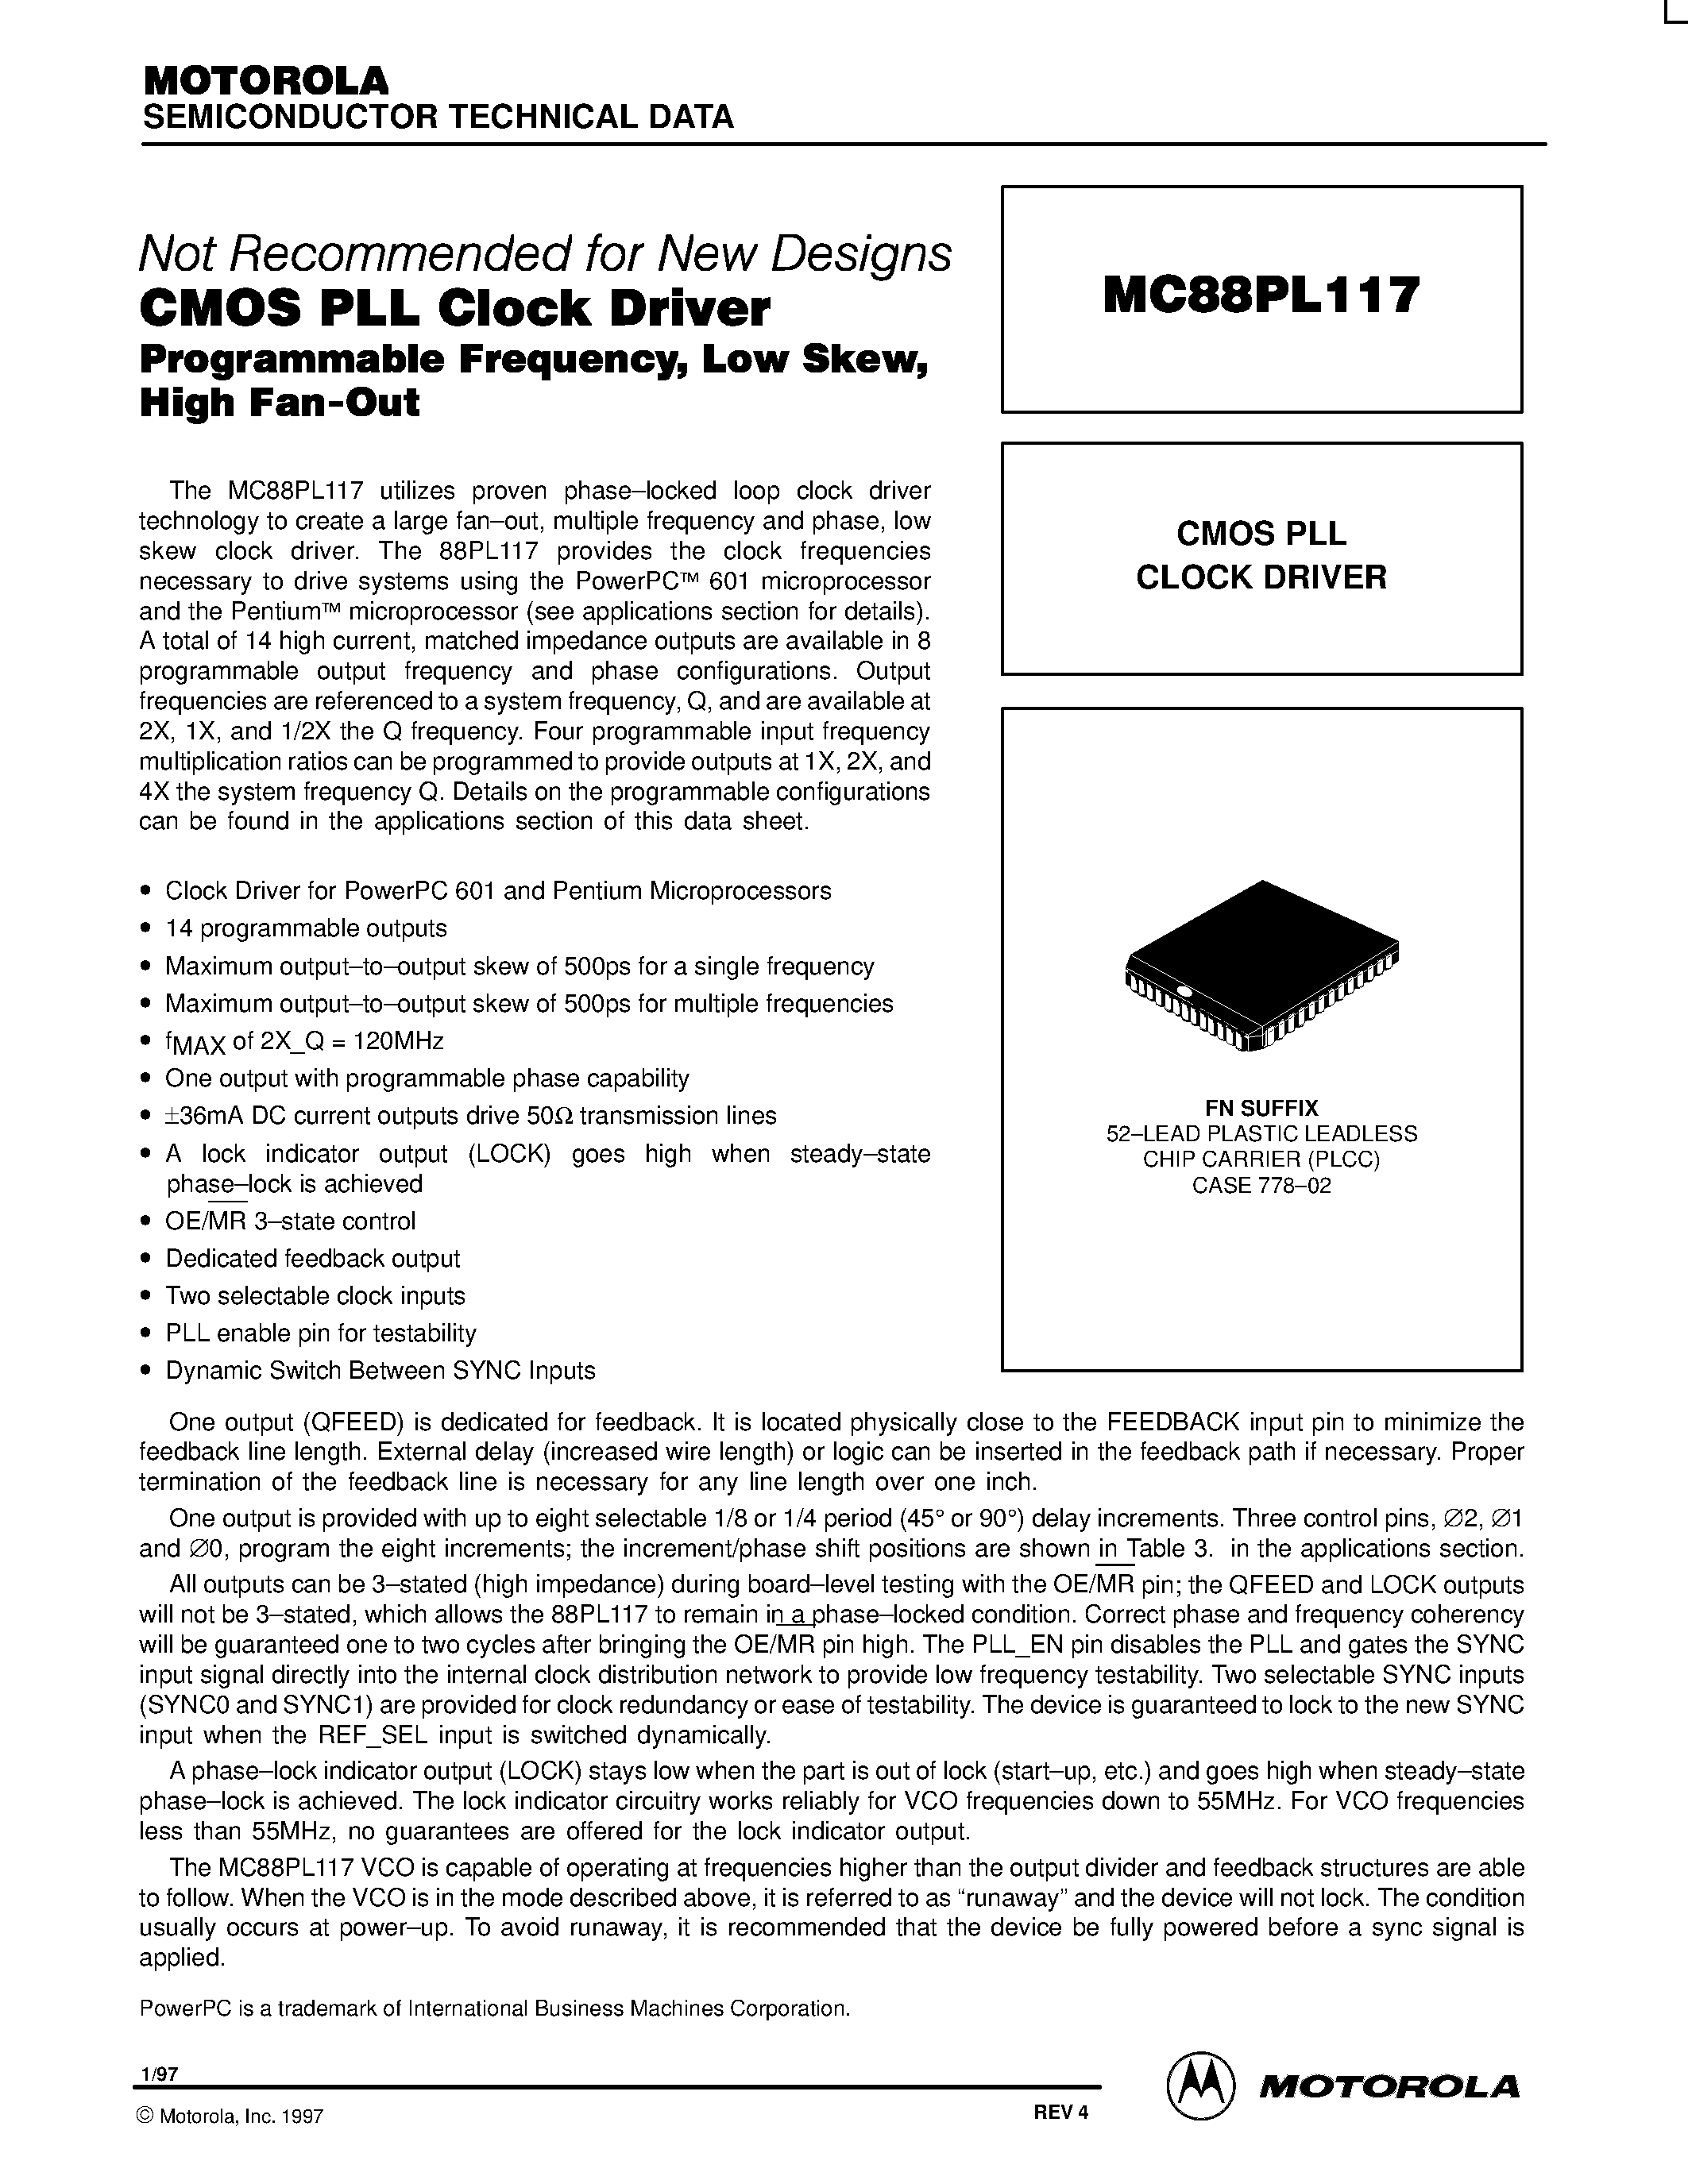 Даташит MC88PL117FN - CMOS PLL CLOCK DRIVER страница 1